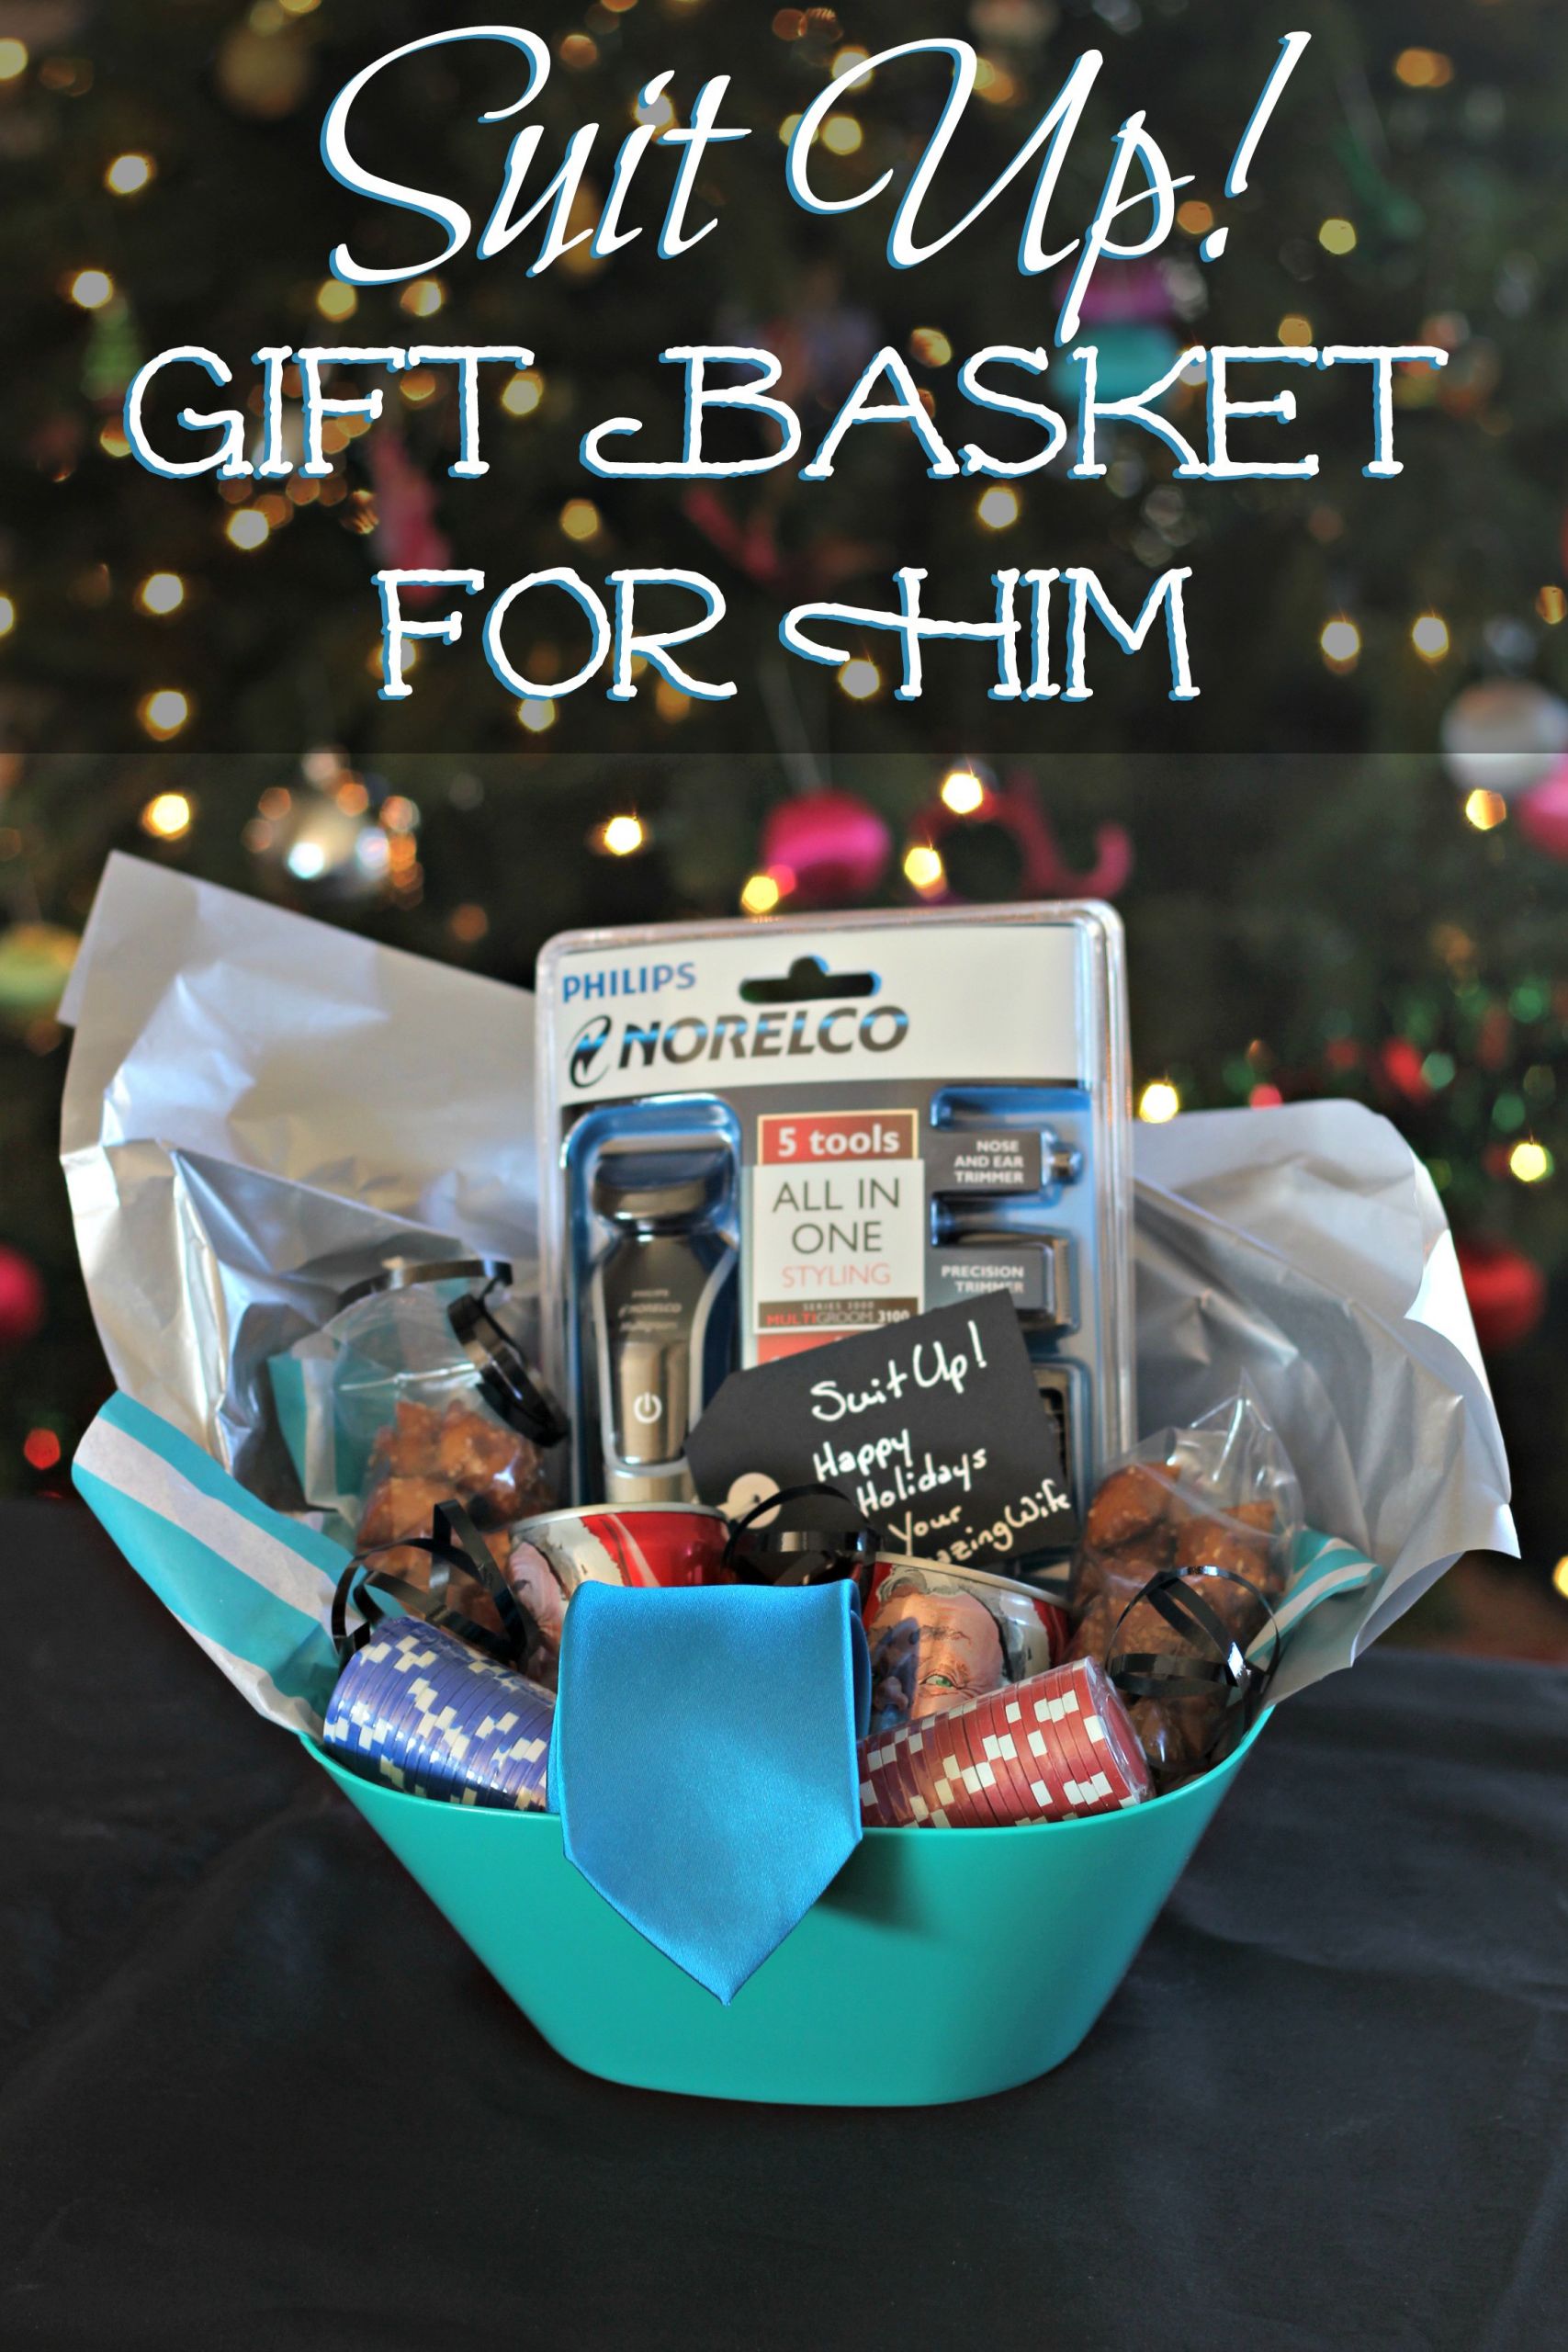 Gift Baskets Ideas For Him
 Suit Up Gift Basket for Him Living a Sunshine Life